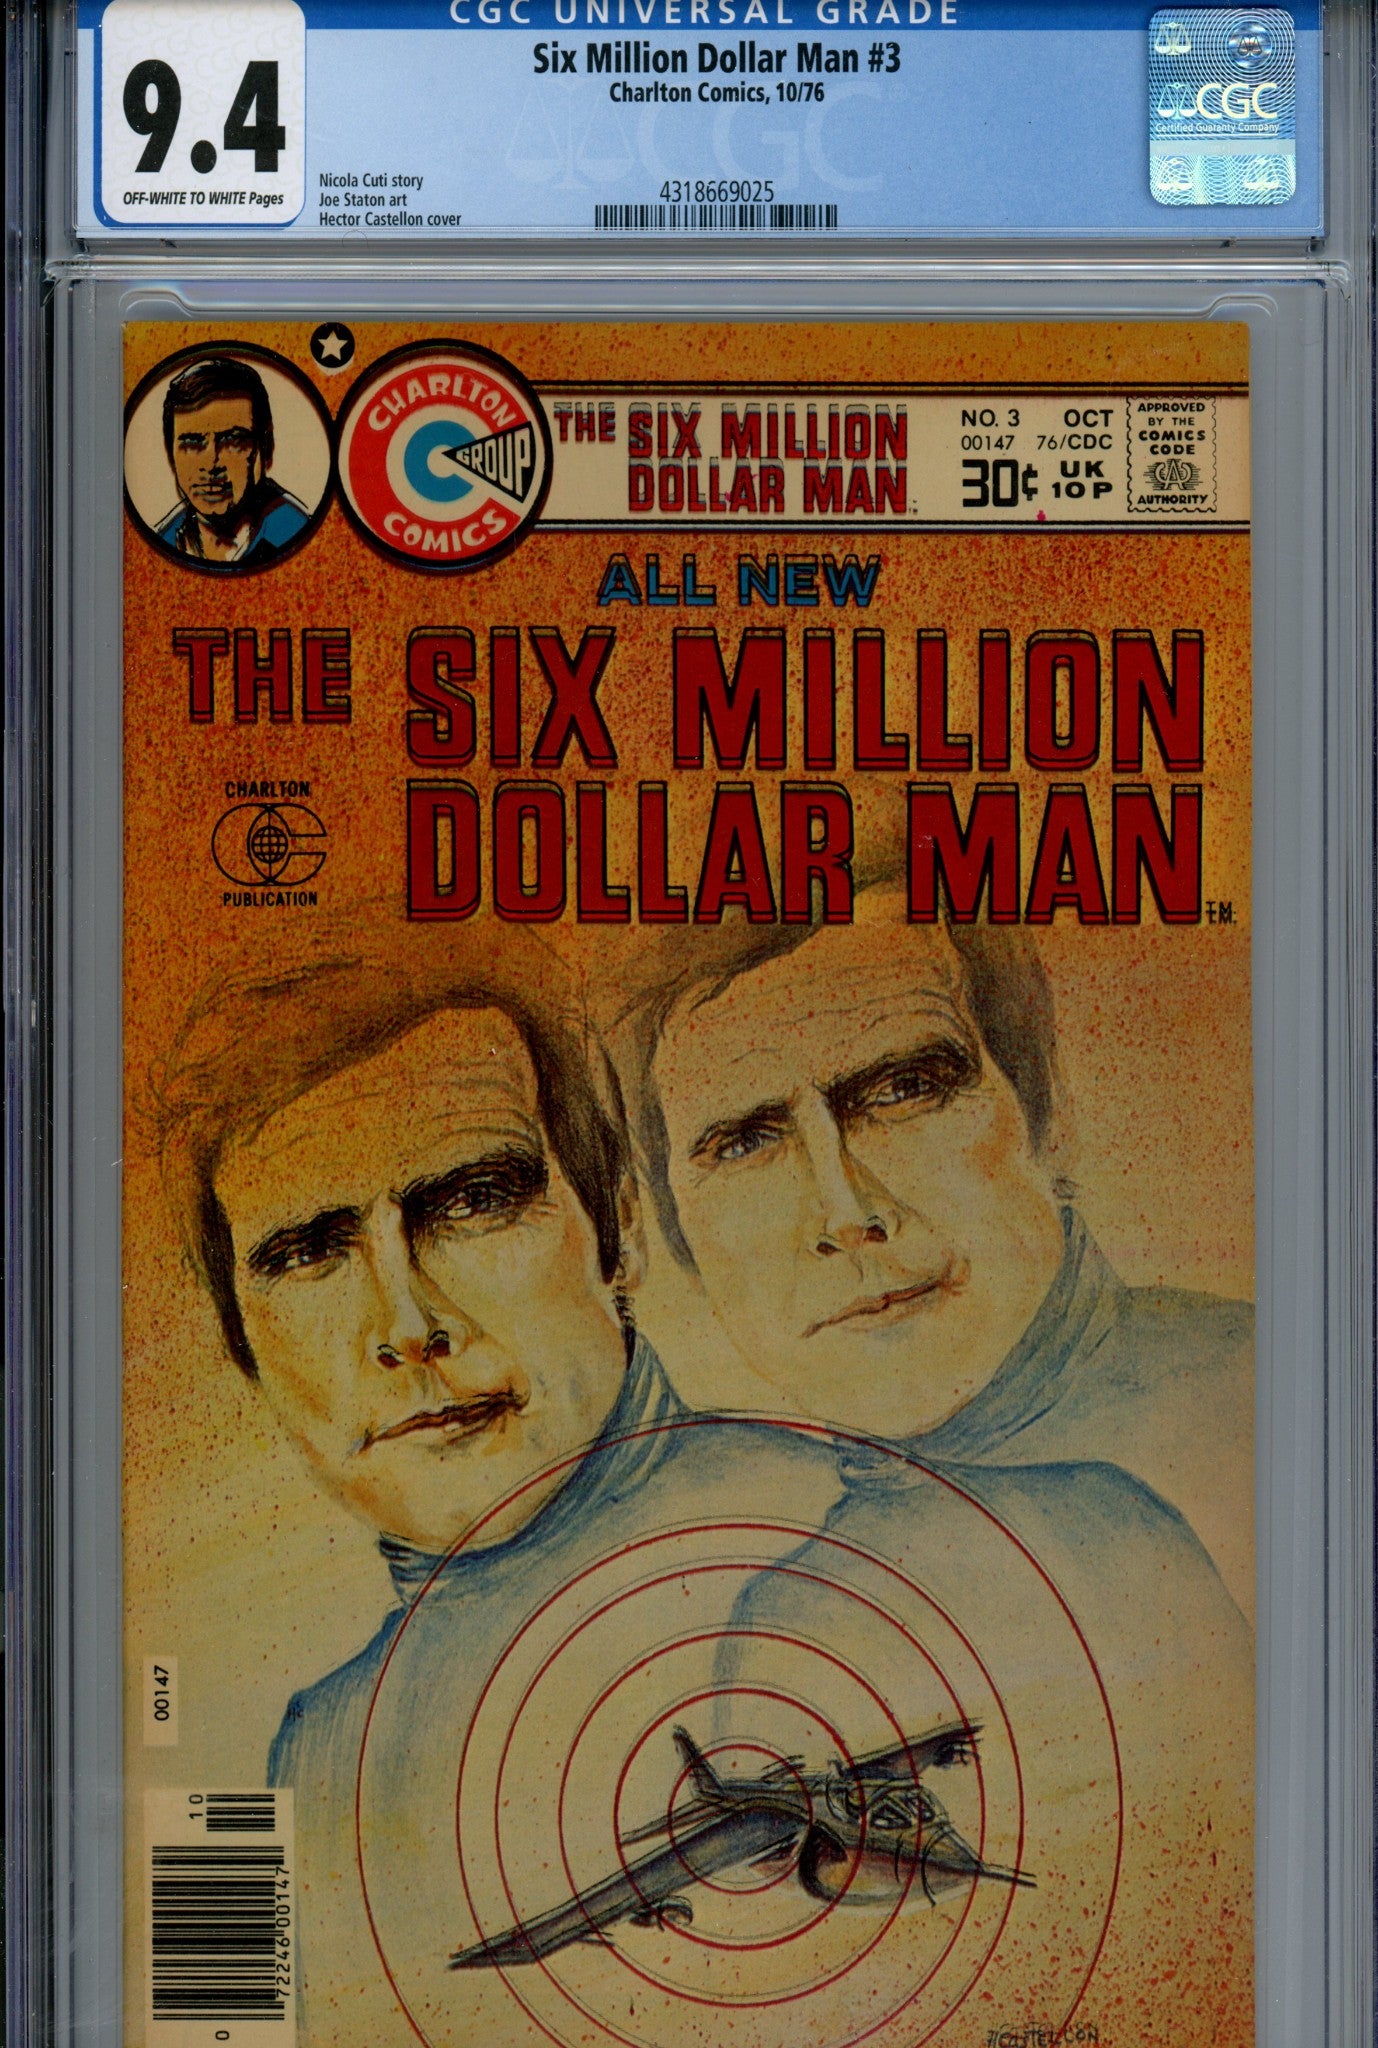 The Six Million Dollar Man 3 CGC 9.4 (NM) Error Printed Off Register (1976) 